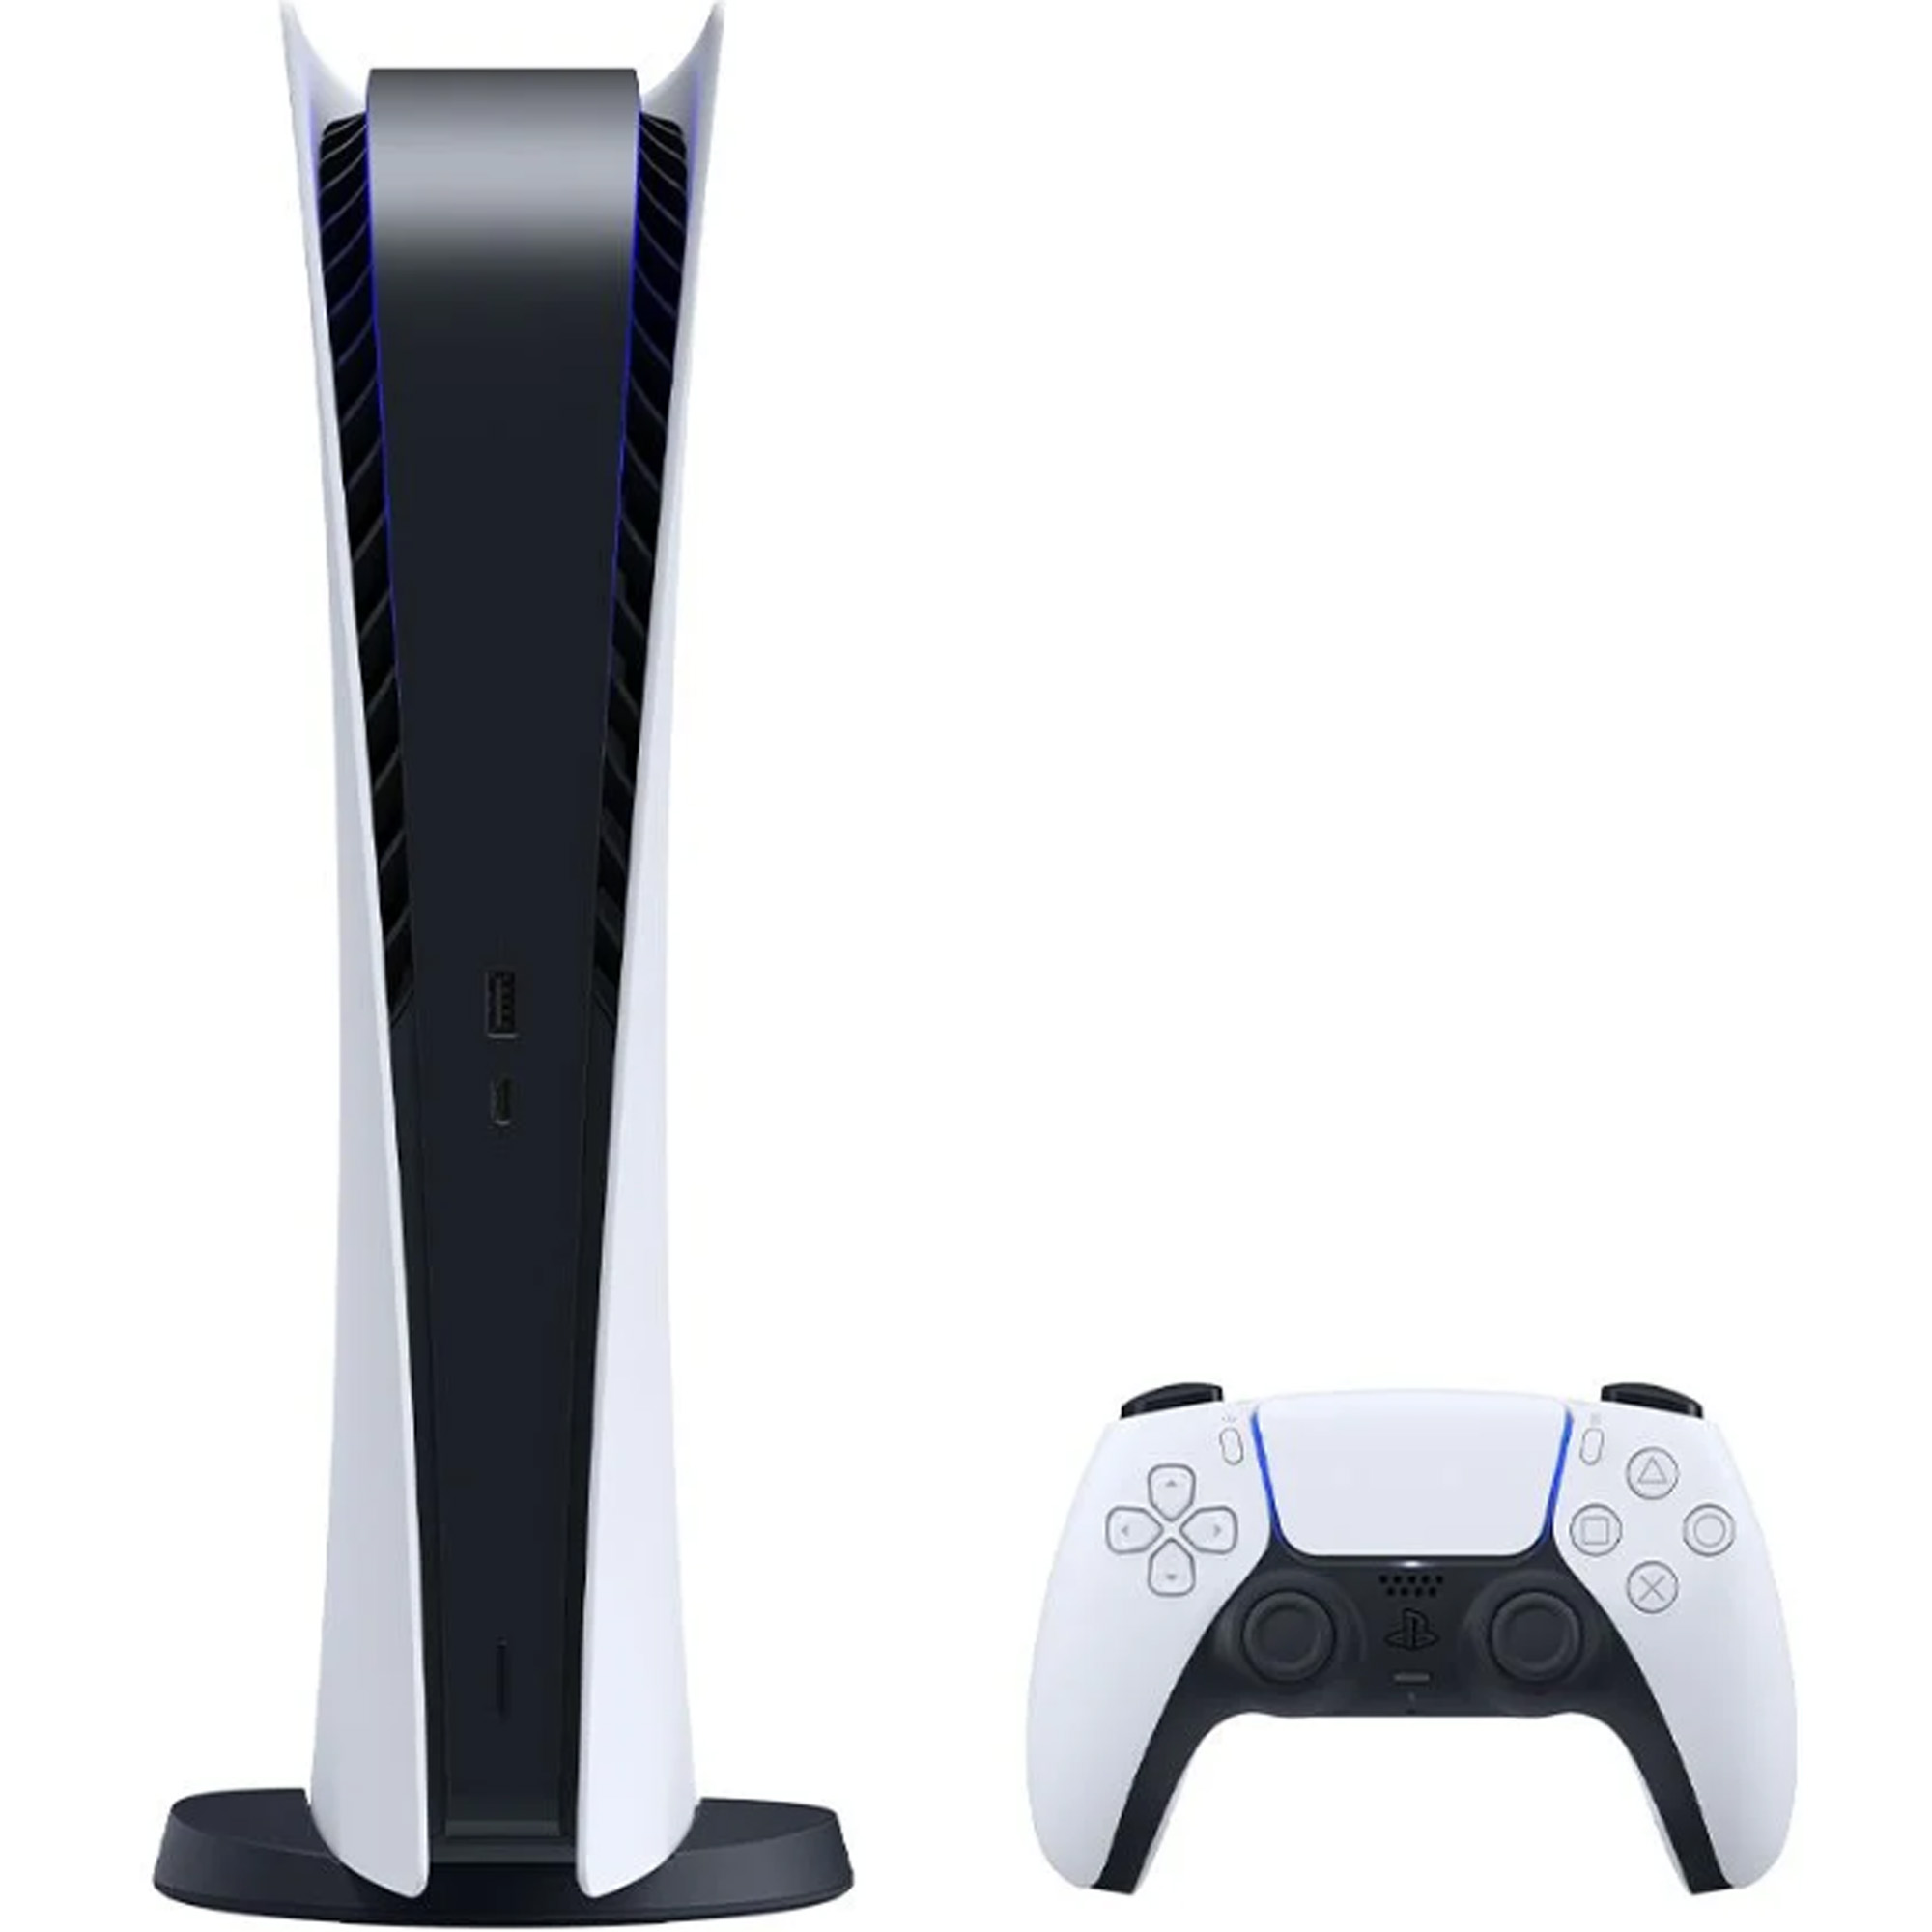 Console PlayStation 5 Digital Edition - PS5 Usado